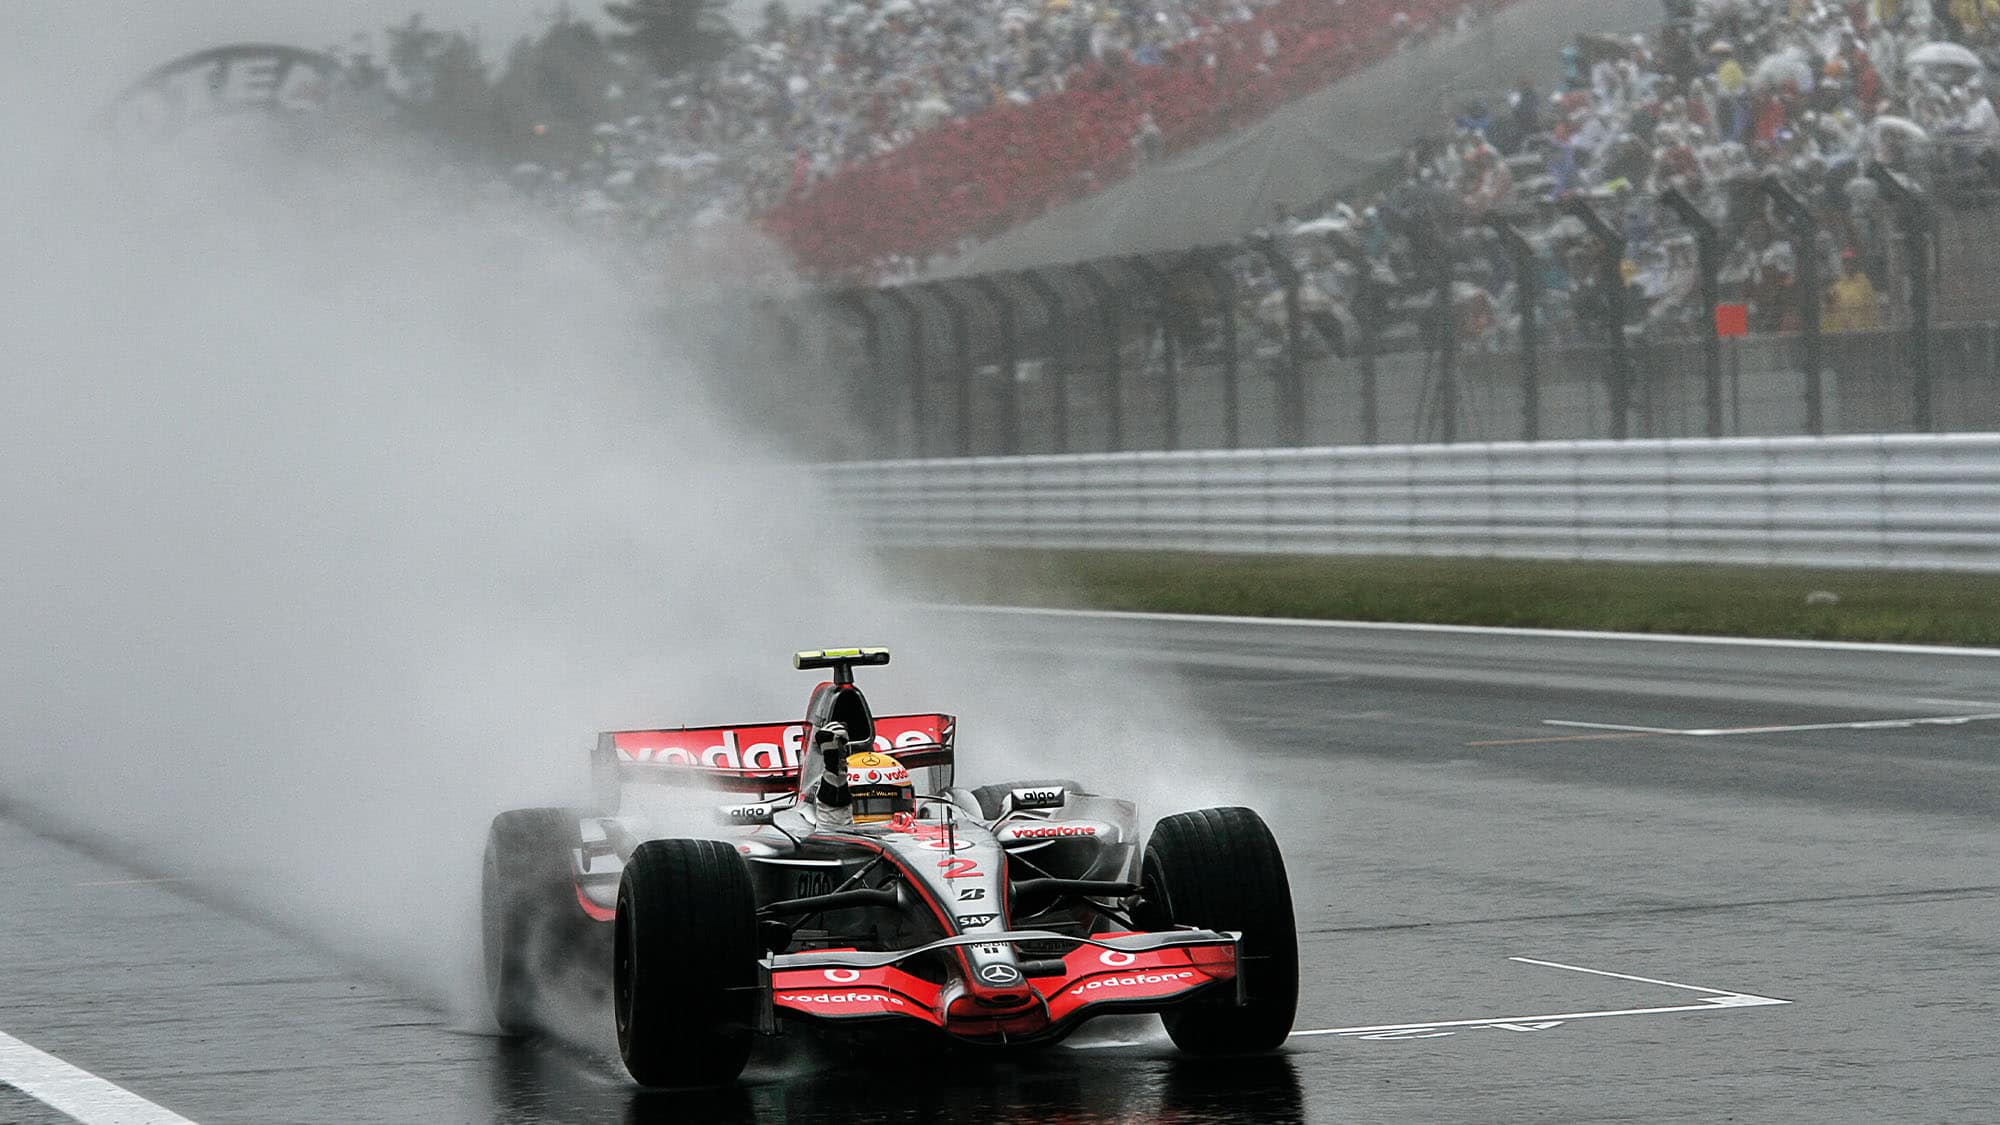 Lewis Hamilton crosses the line to win the 2007 Japanese Grand Prix